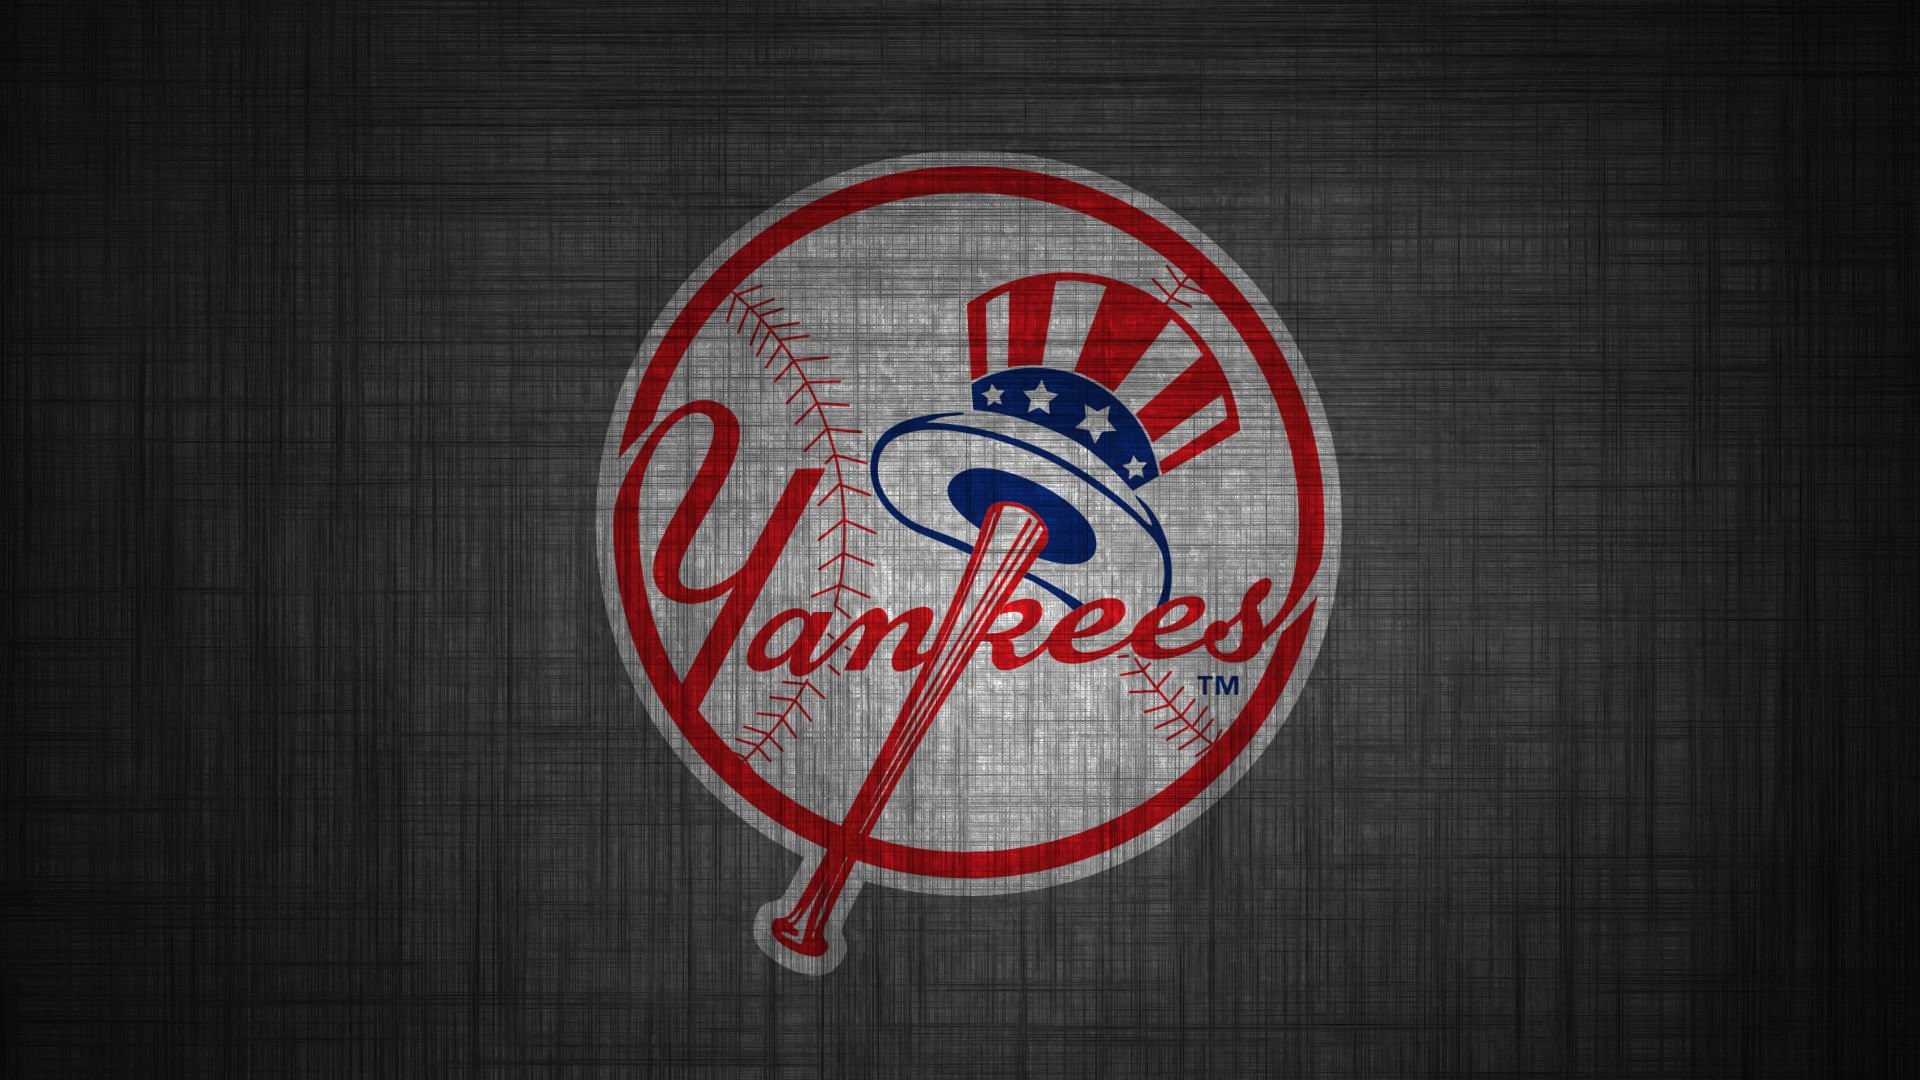 New York Yankees phone wallpaper 1080P 2k 4k Full HD Wallpapers  Backgrounds Free Download  Wallpaper Crafter